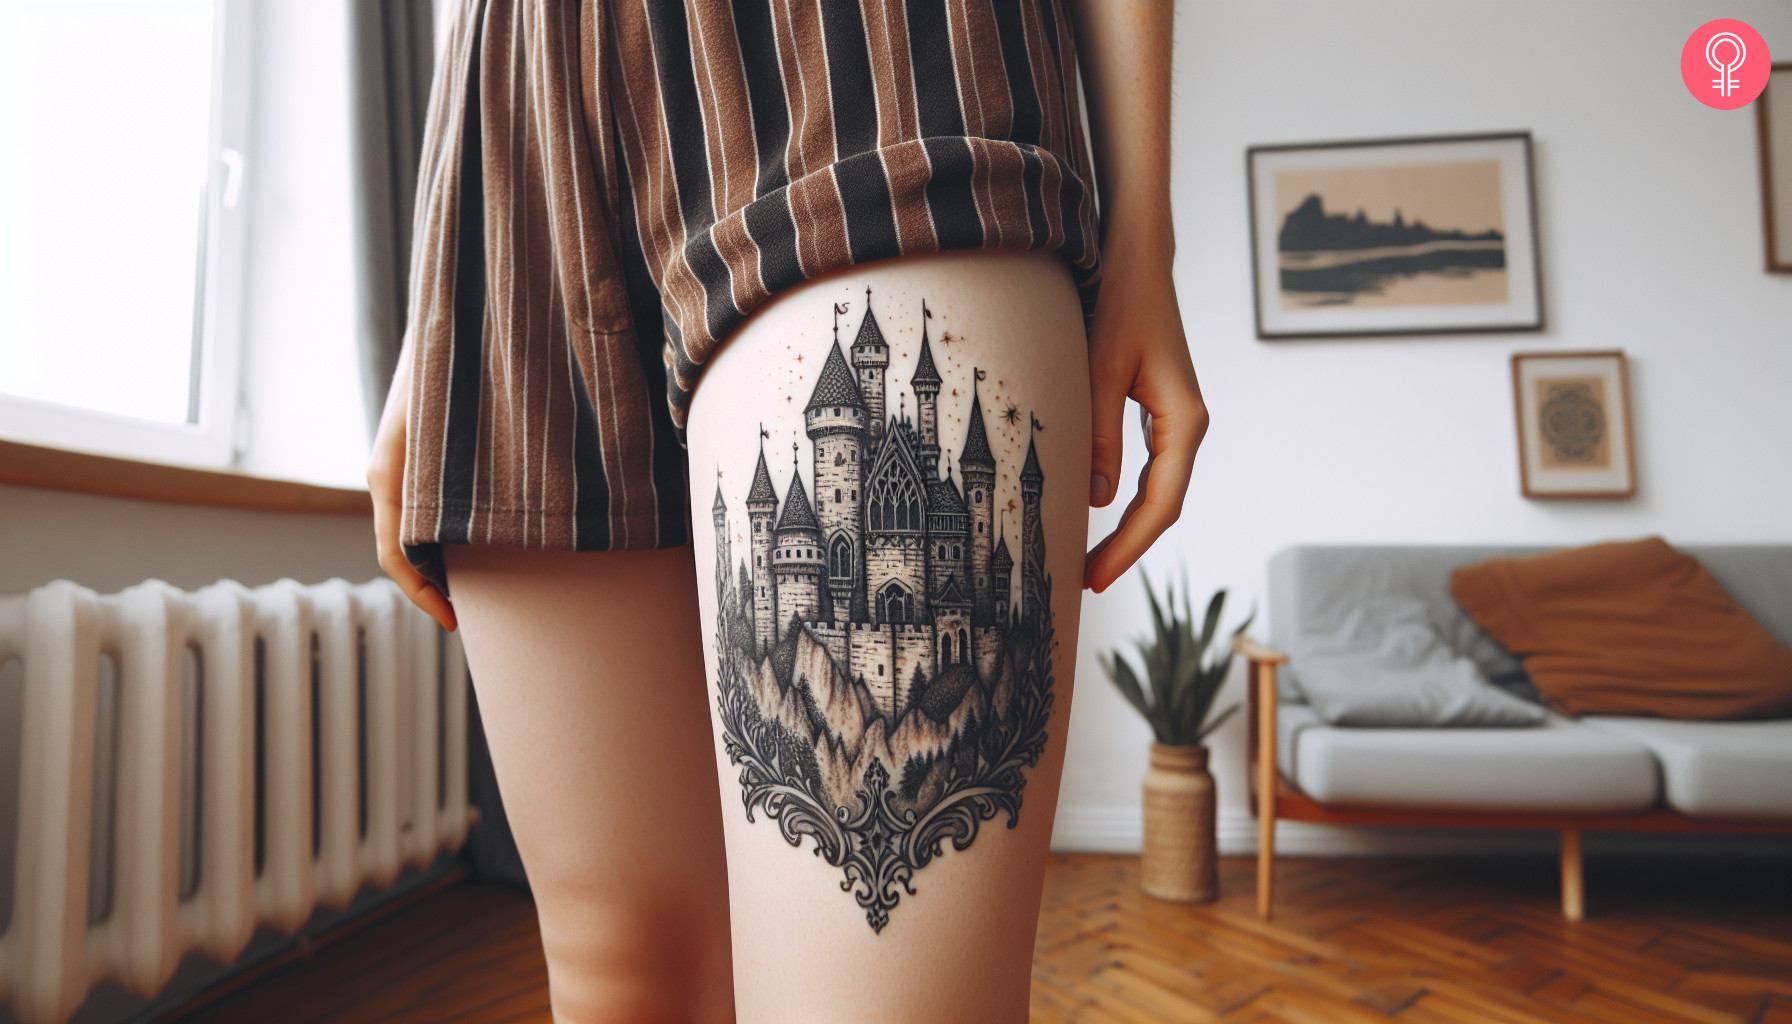 A high fantasy tattoo on the thigh